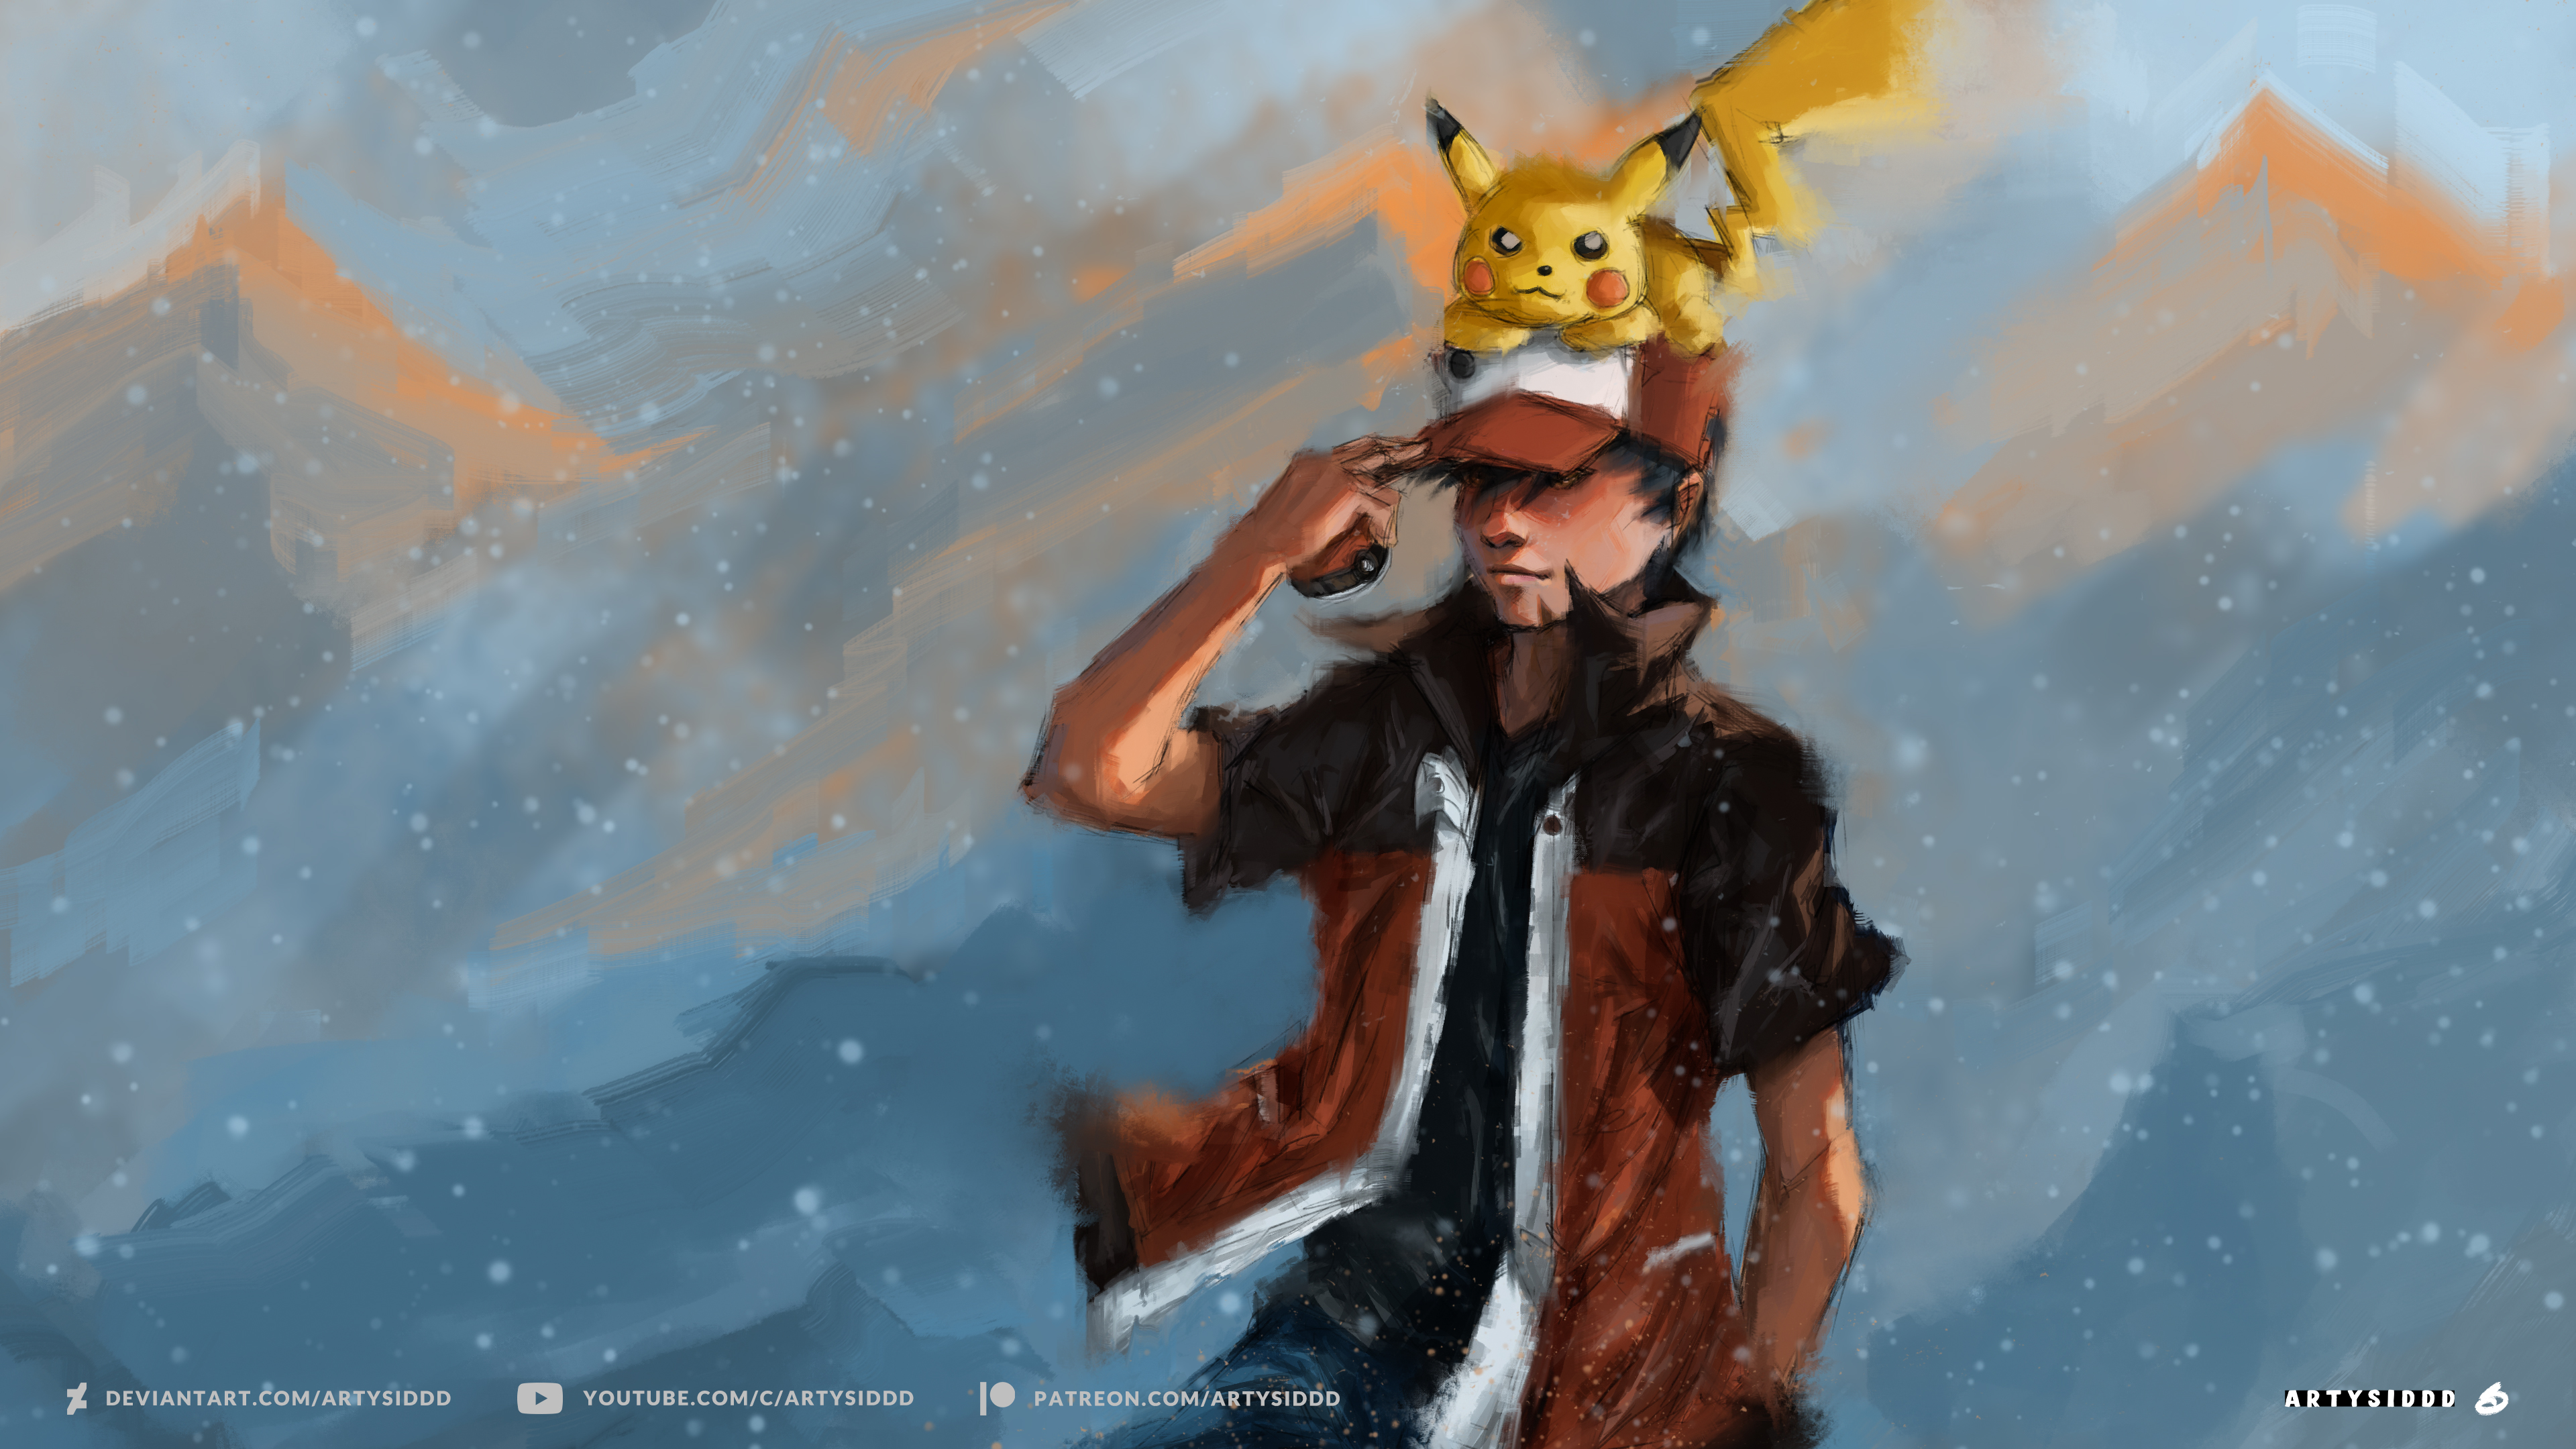 4K Anime Pokémon Wallpaper and Background Image